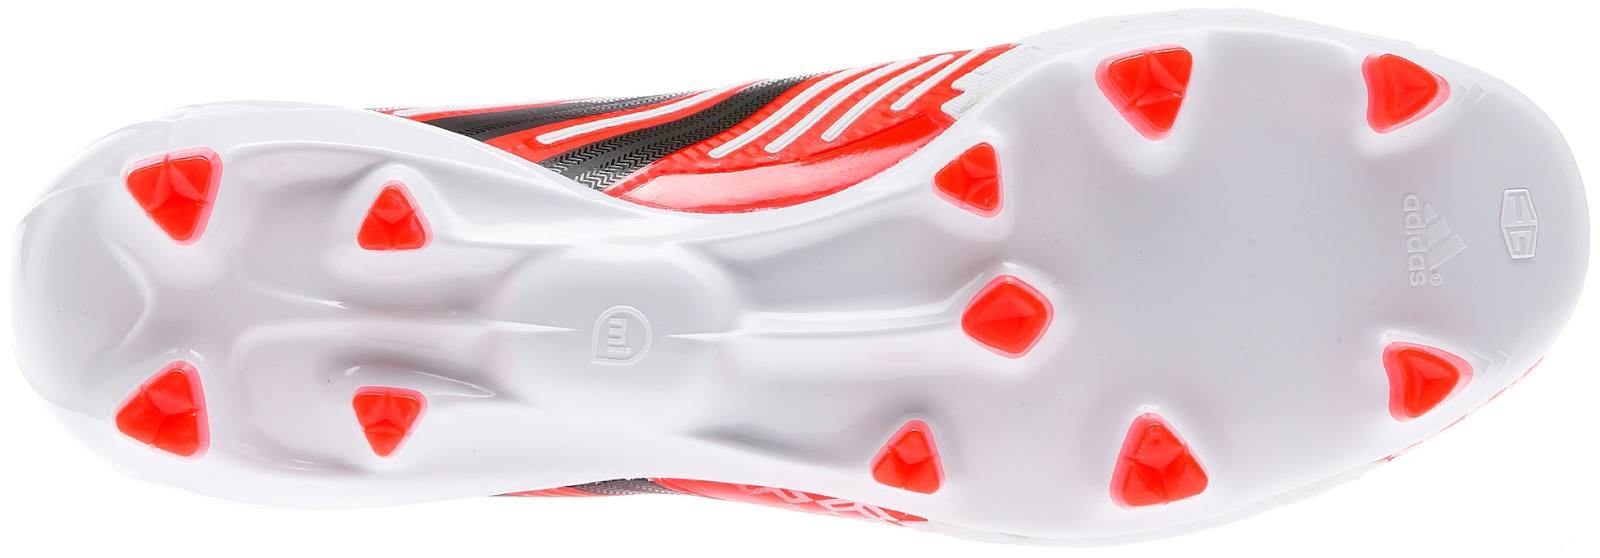 Adidas-Predator-LZ-II-Boots-Red-White-Sl-sole (1)